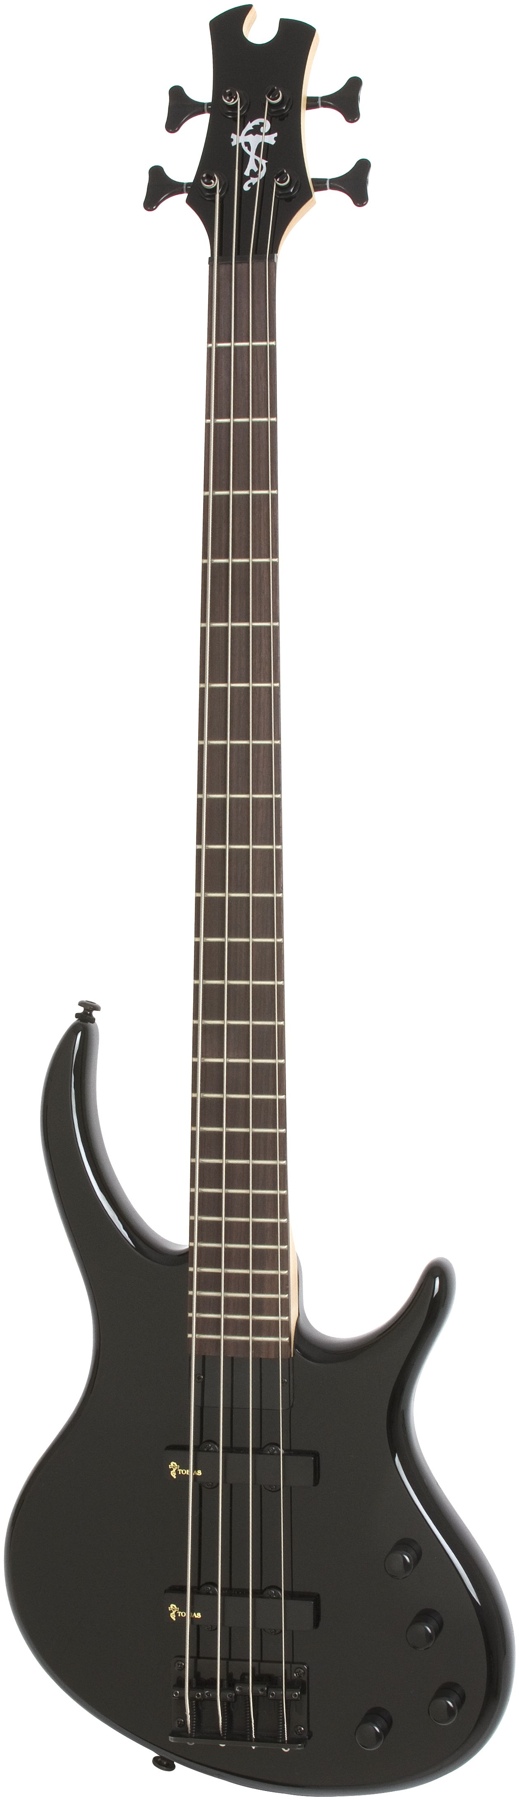 Toby Standard-IV Bass